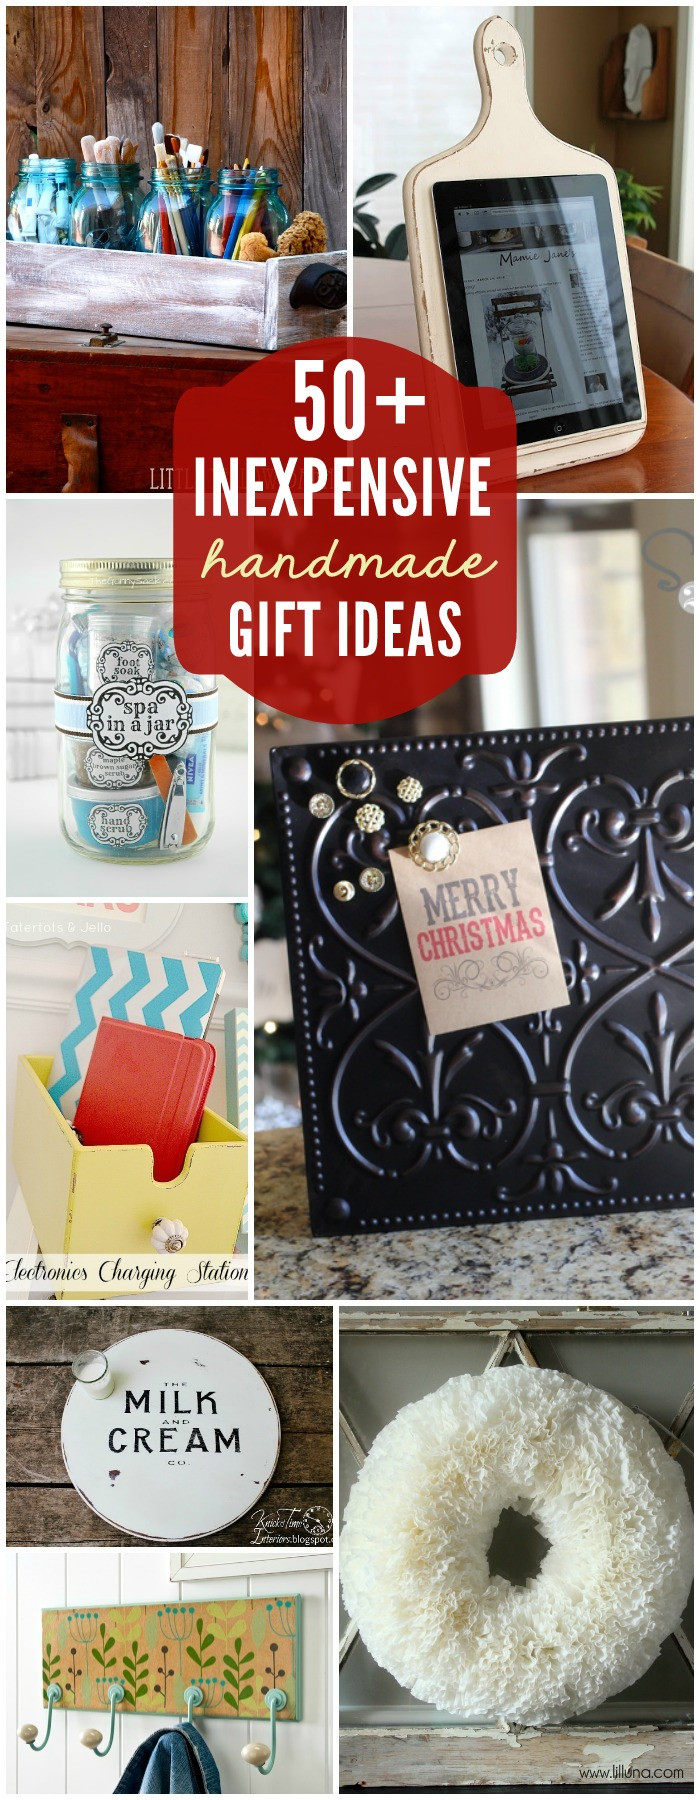 Diy Christmas Gift Ideas
 75 Gift Ideas under $5